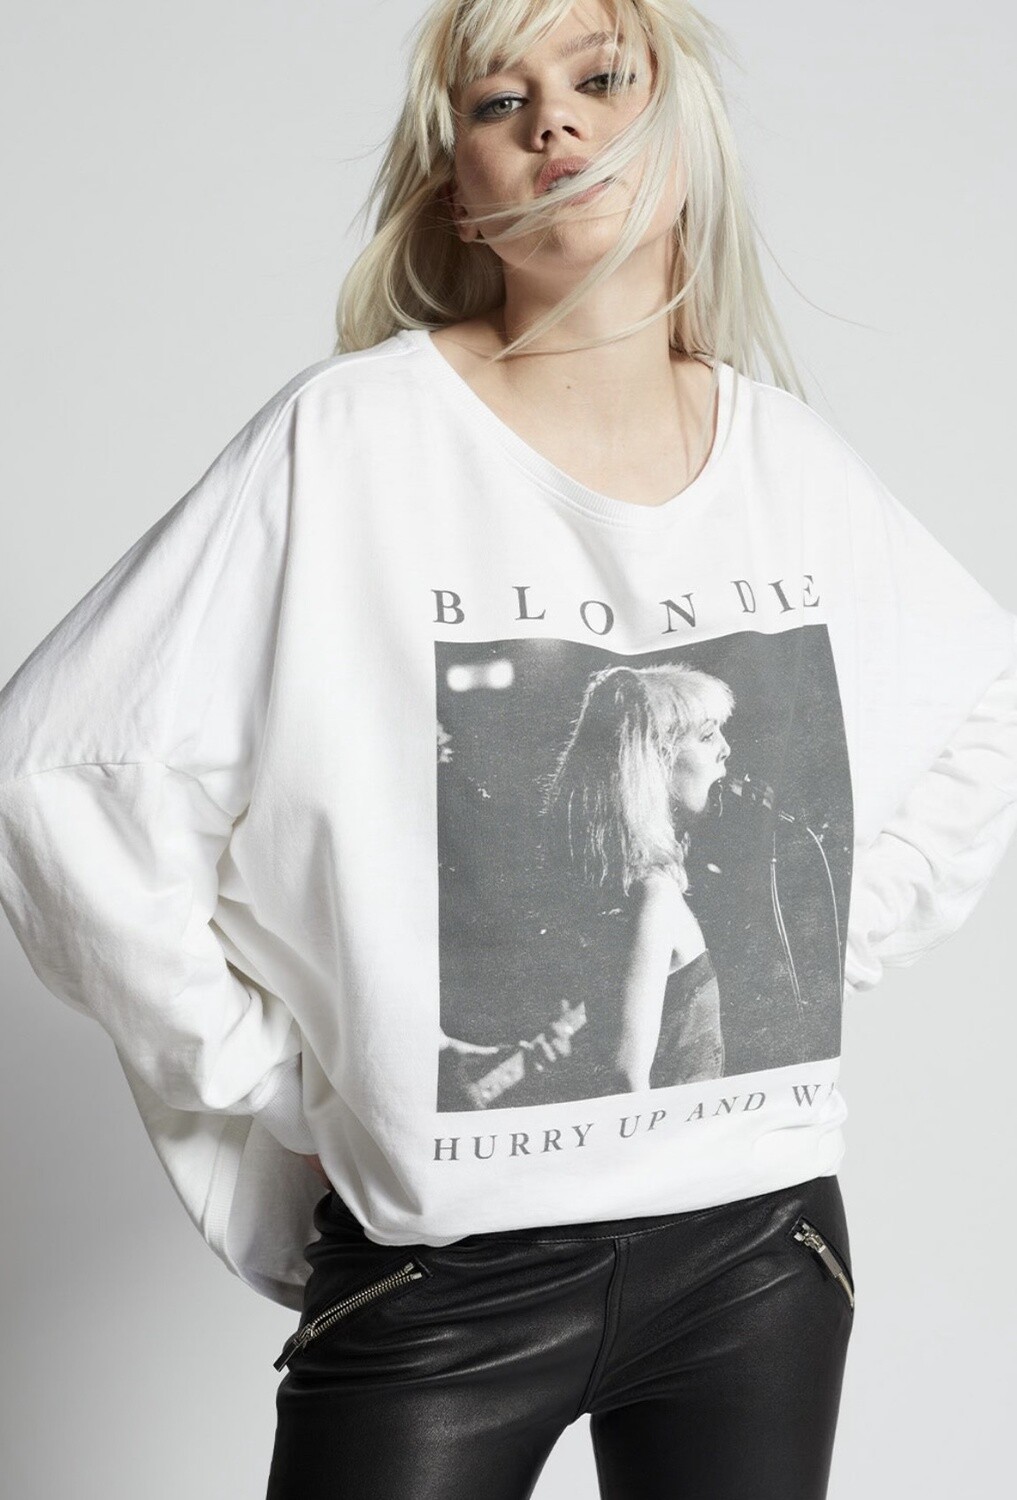 Recycled Karma Blondie o/s ls fleece sweatshirt, color: white, Size: o/s